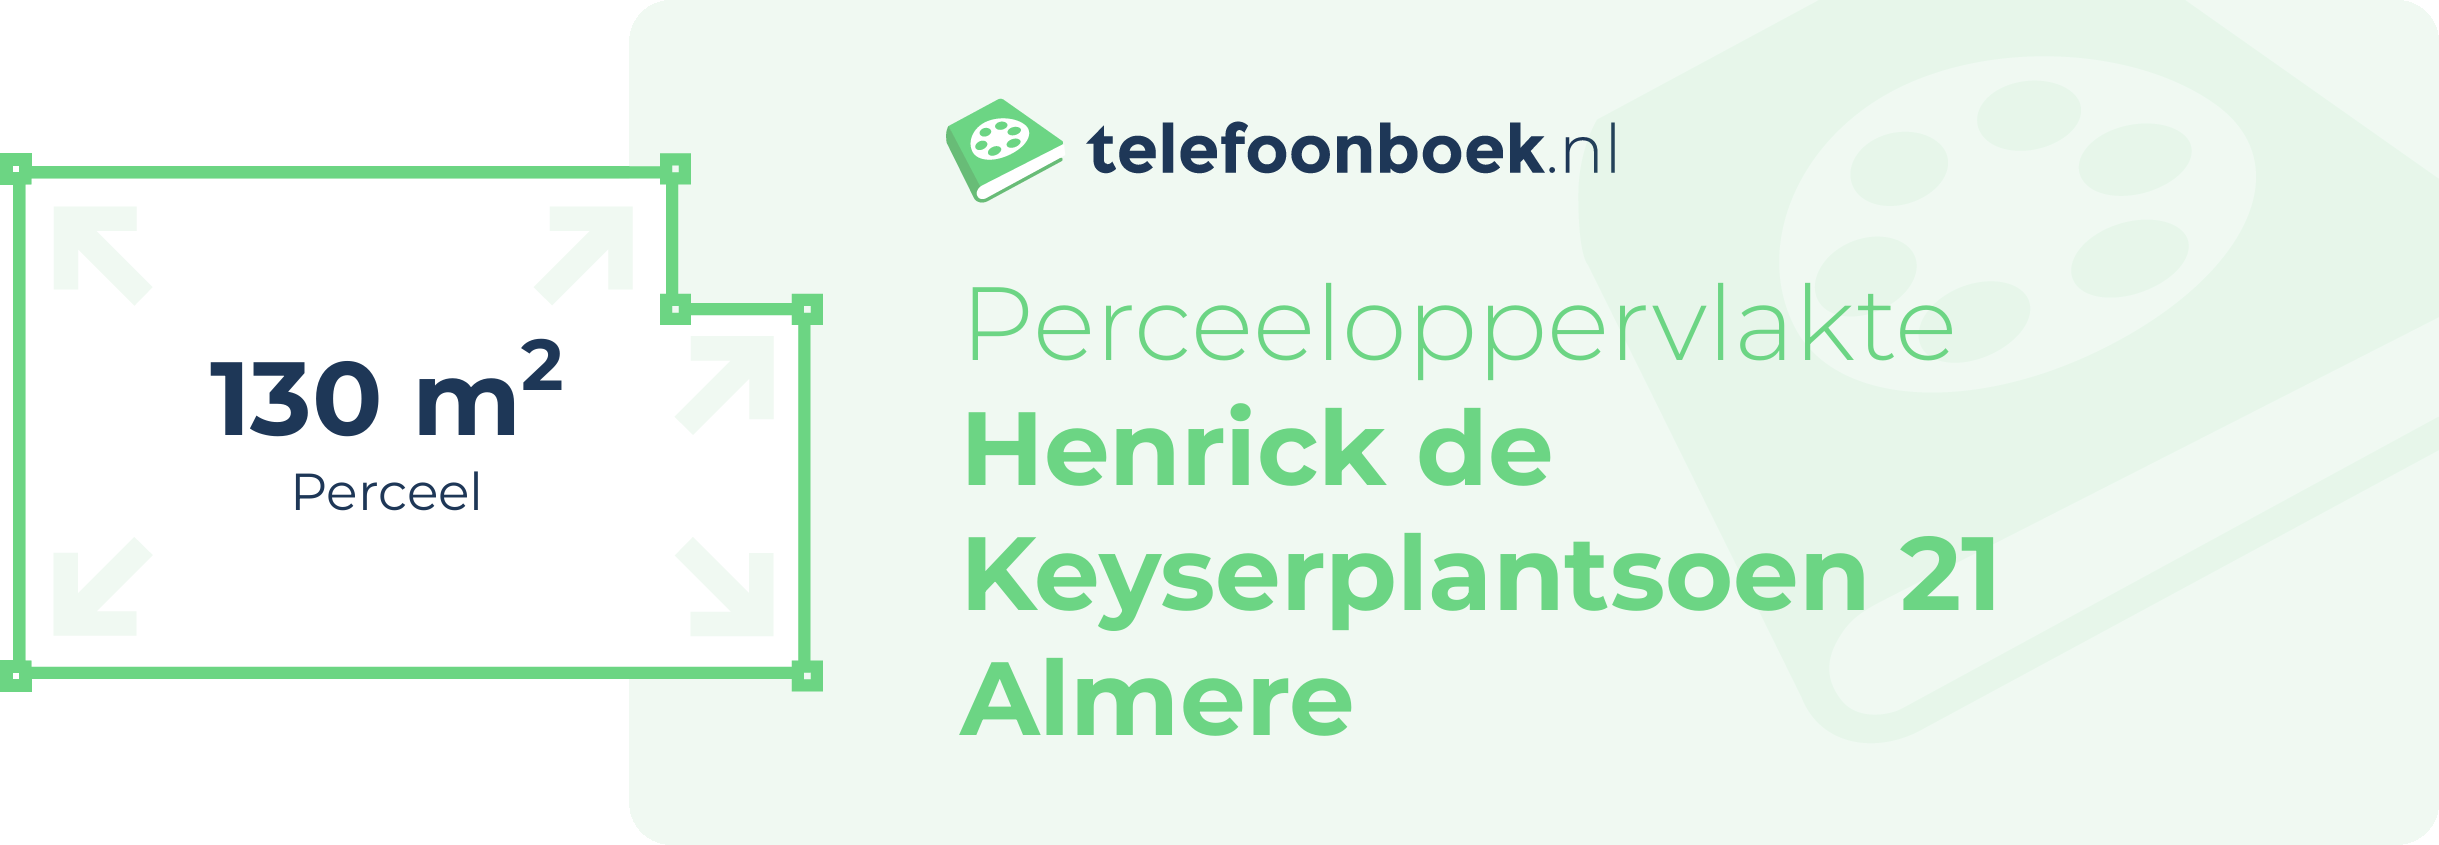 Perceeloppervlakte Henrick De Keyserplantsoen 21 Almere